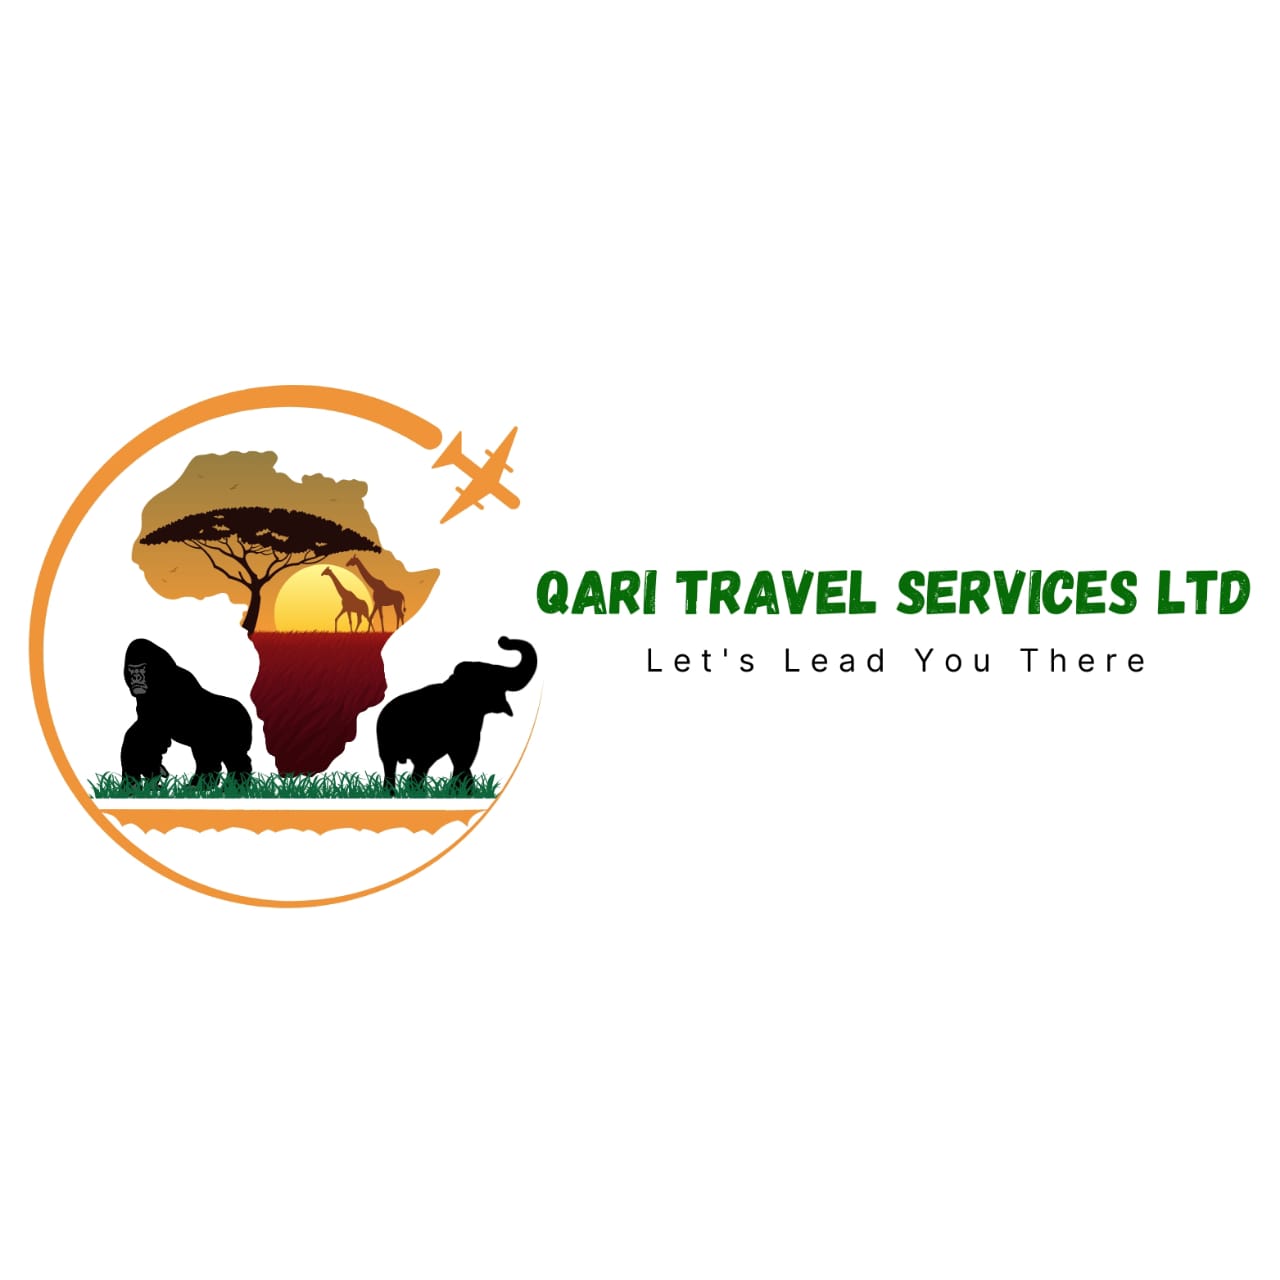 Qari Travel Services Ltd